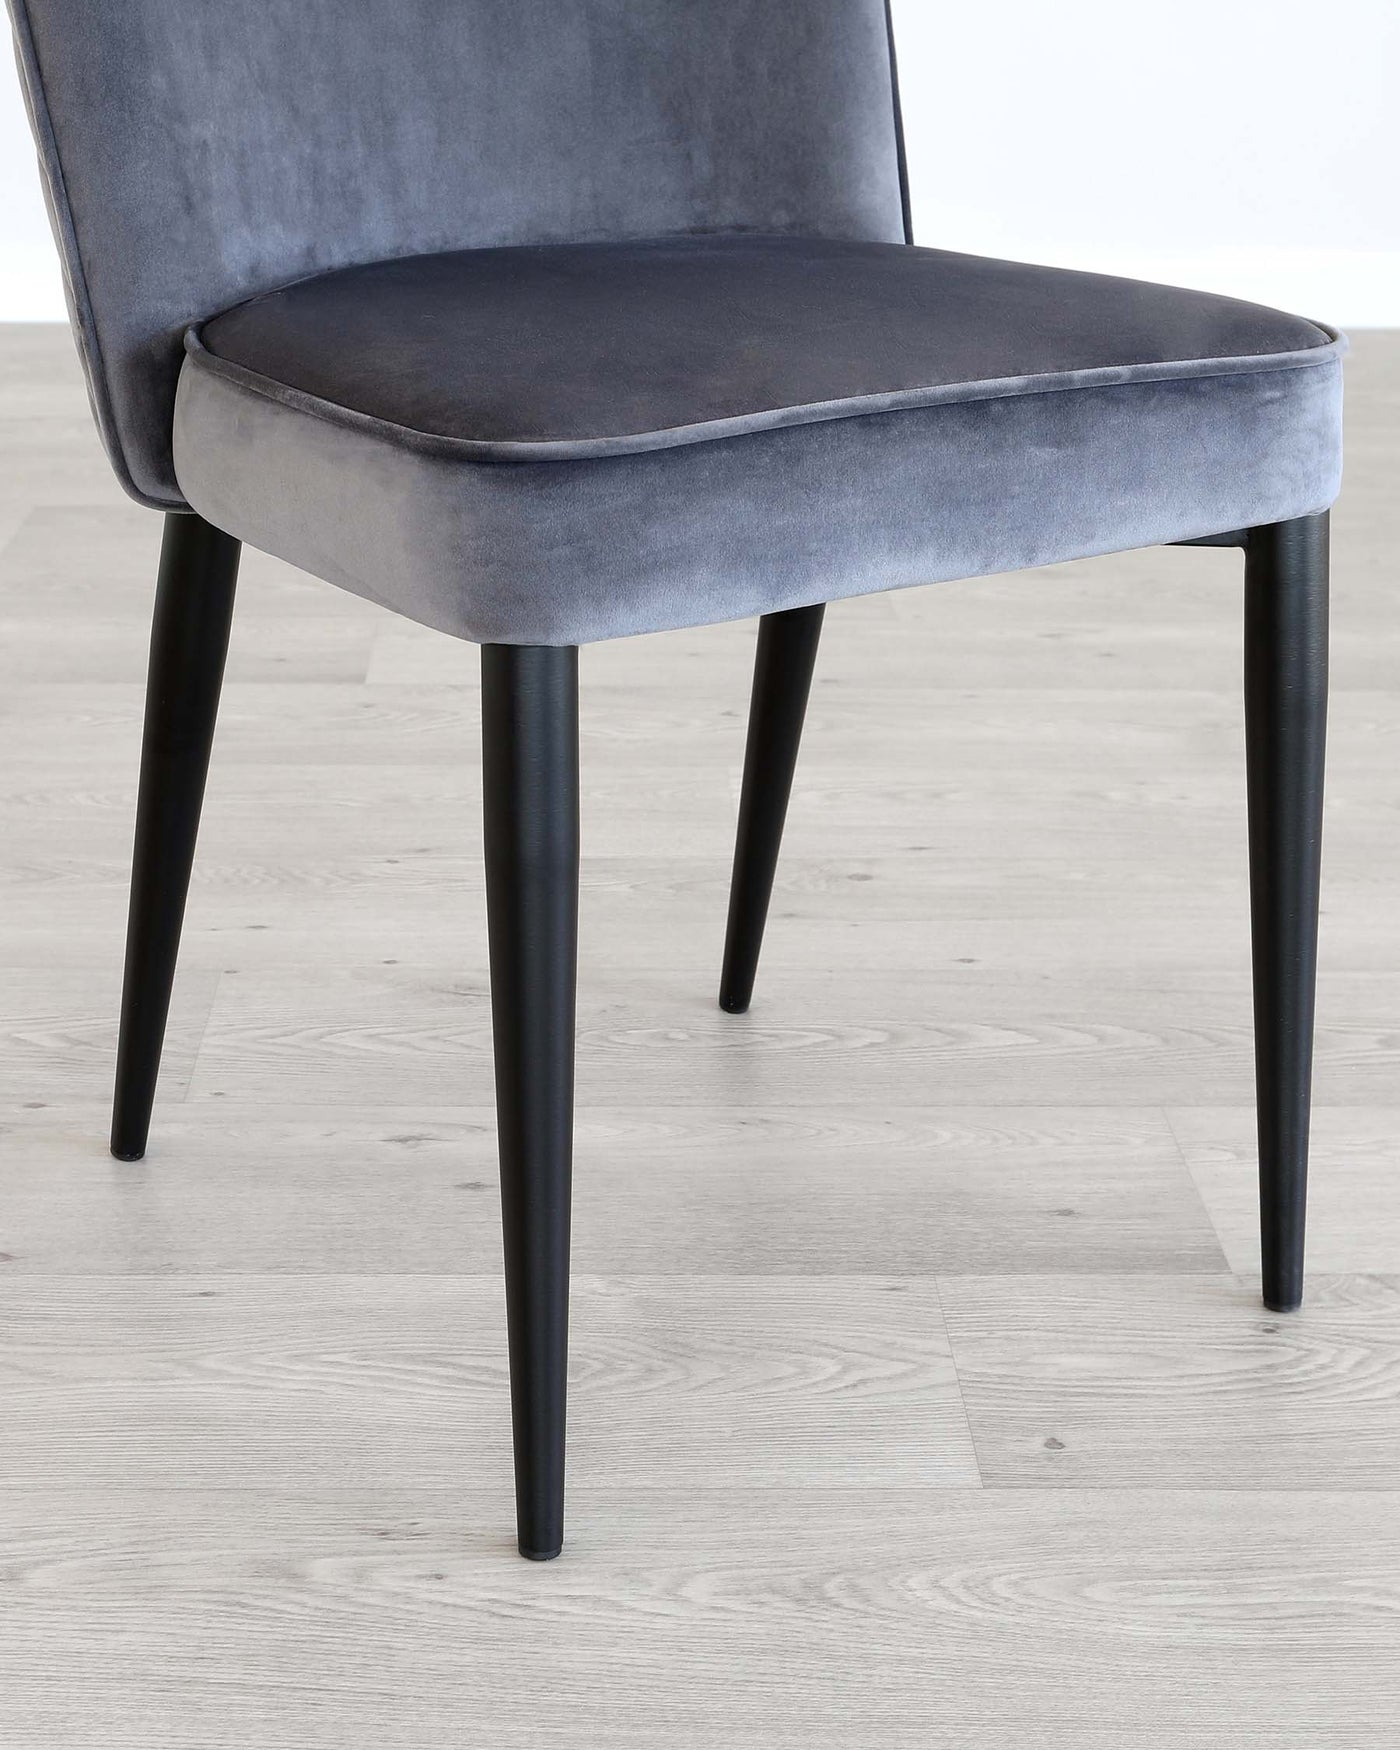 Elegant modern dining chair with a soft grey velvet upholstery and sleek black tapered legs on a light wooden floor.